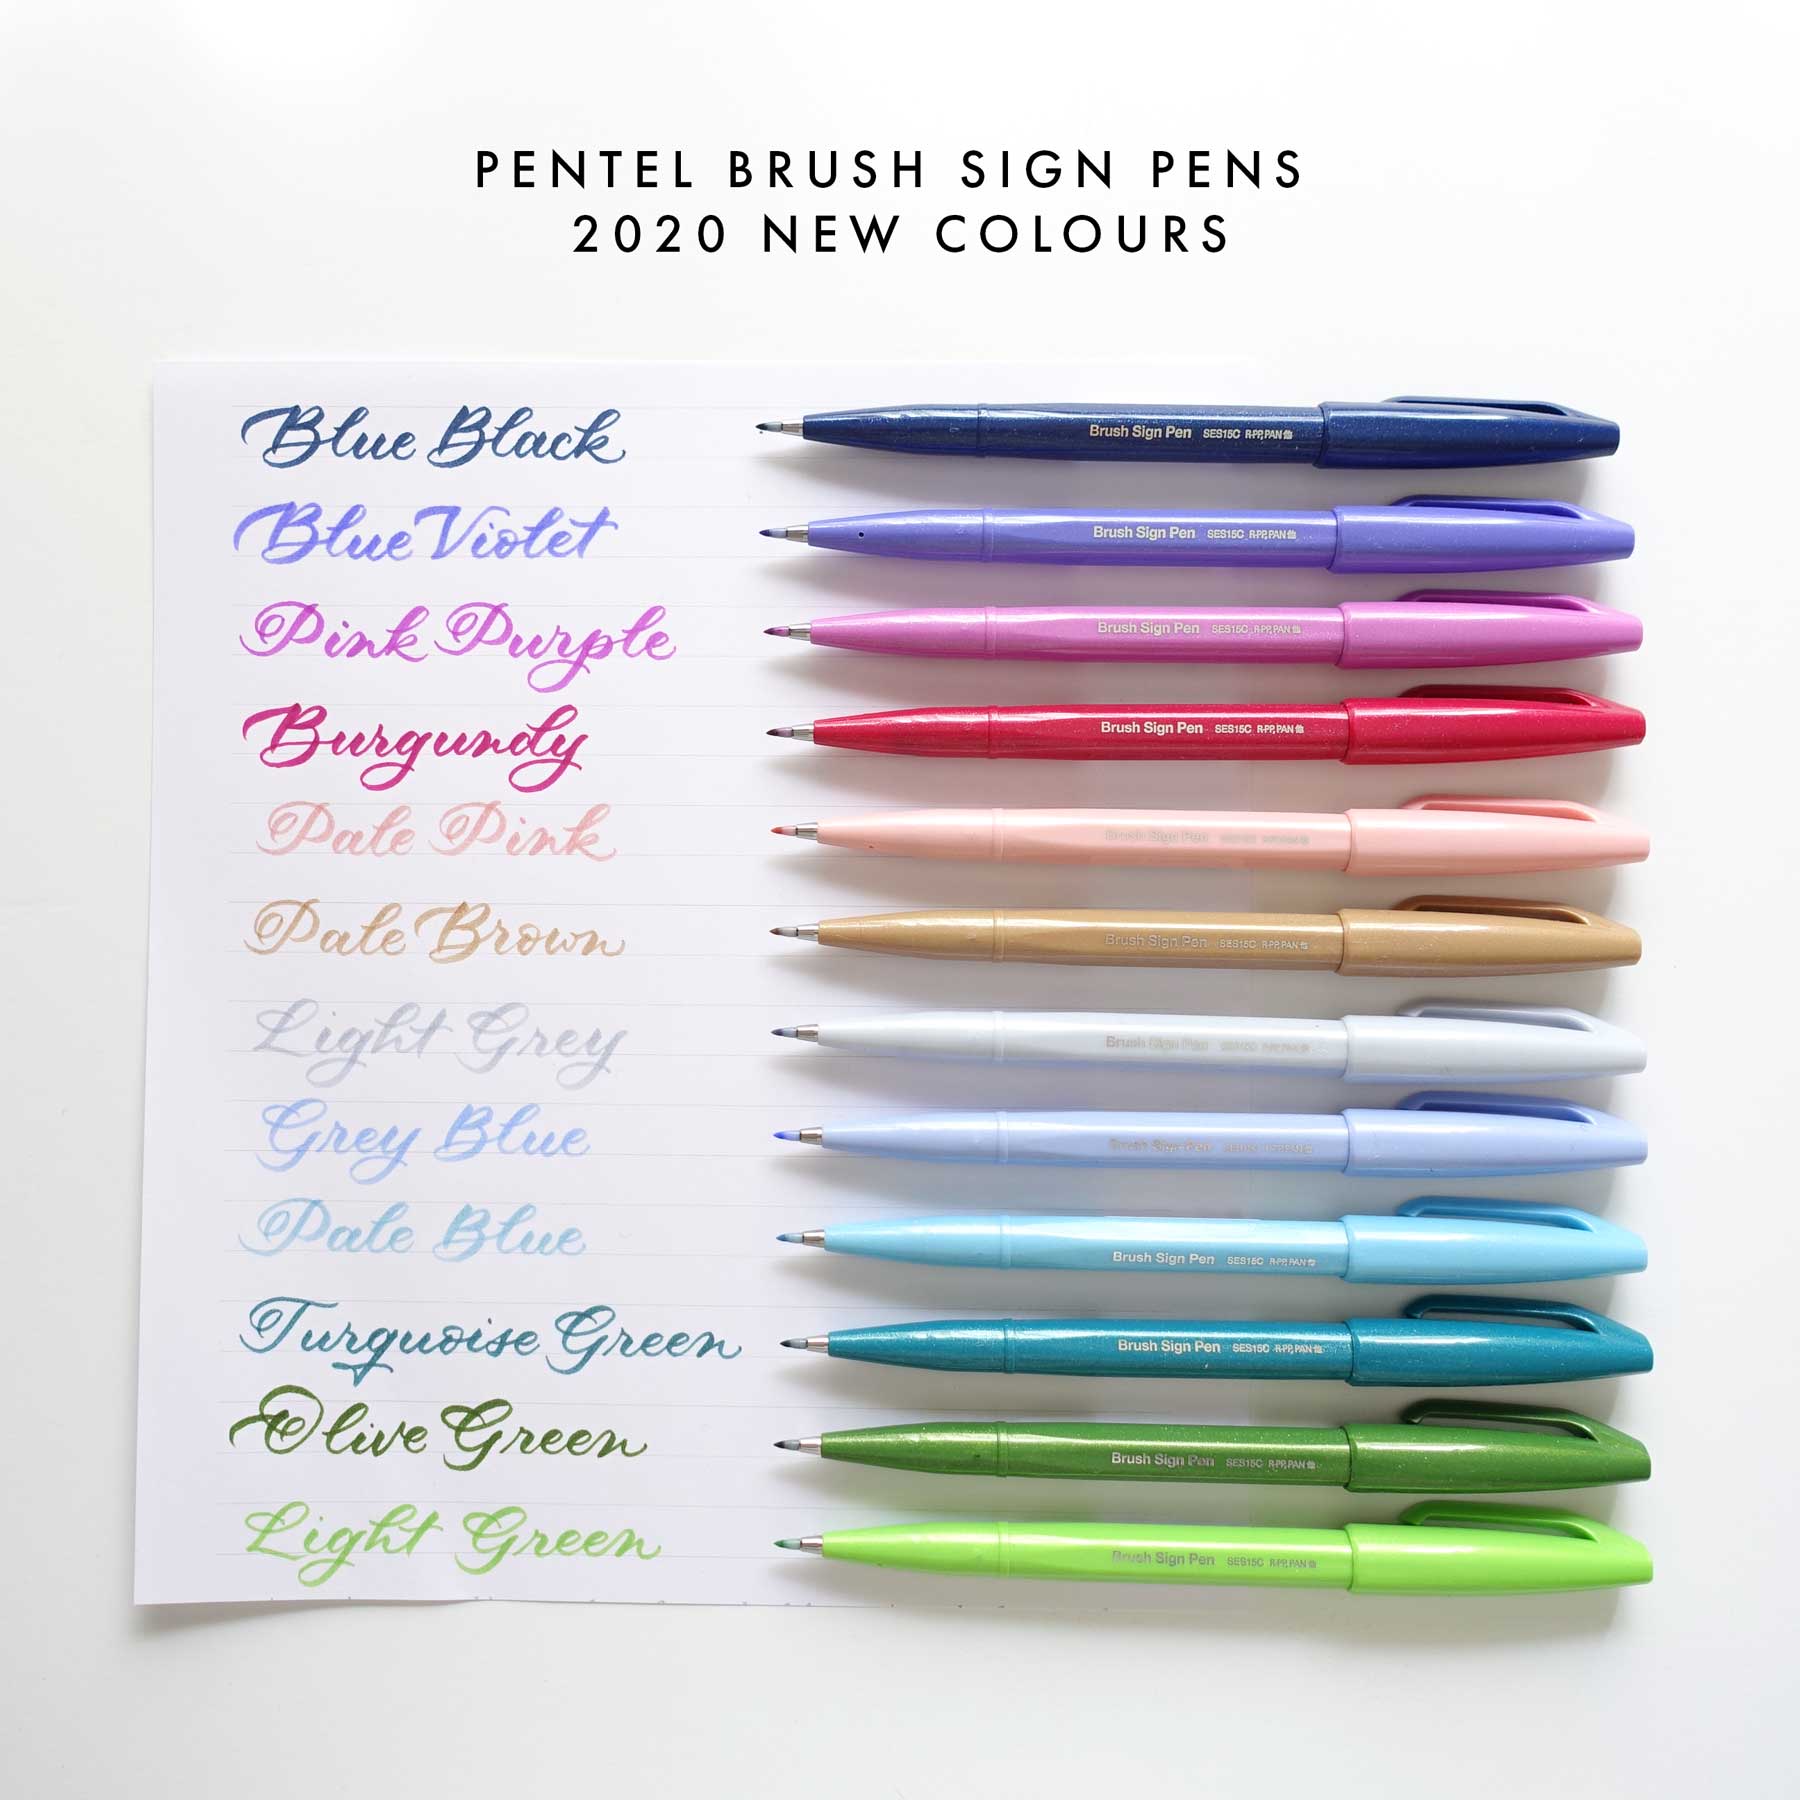 Pentel brush fude touch sign pens 2020 new colours Australia